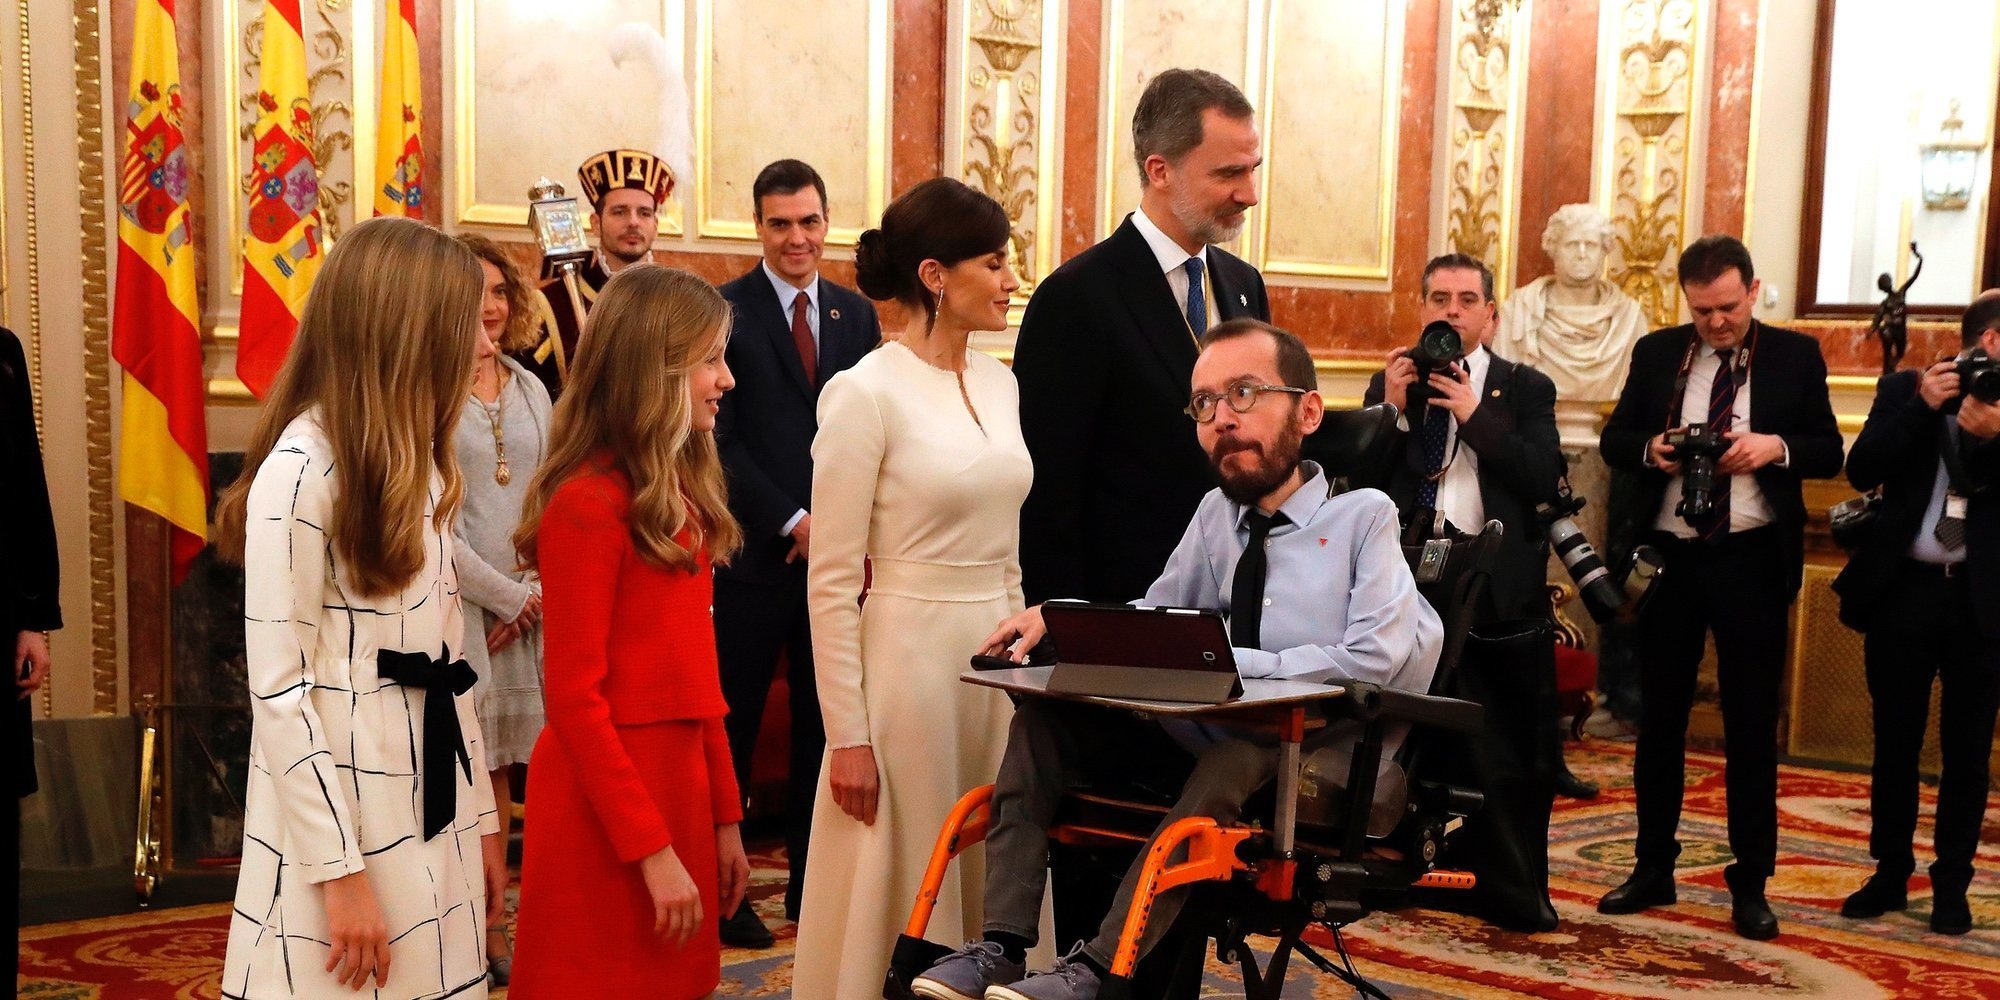 El feo de Pablo Echenique a la Princesa Leonor y la Infanta Sofía en la Apertura de la XIV Legislatura